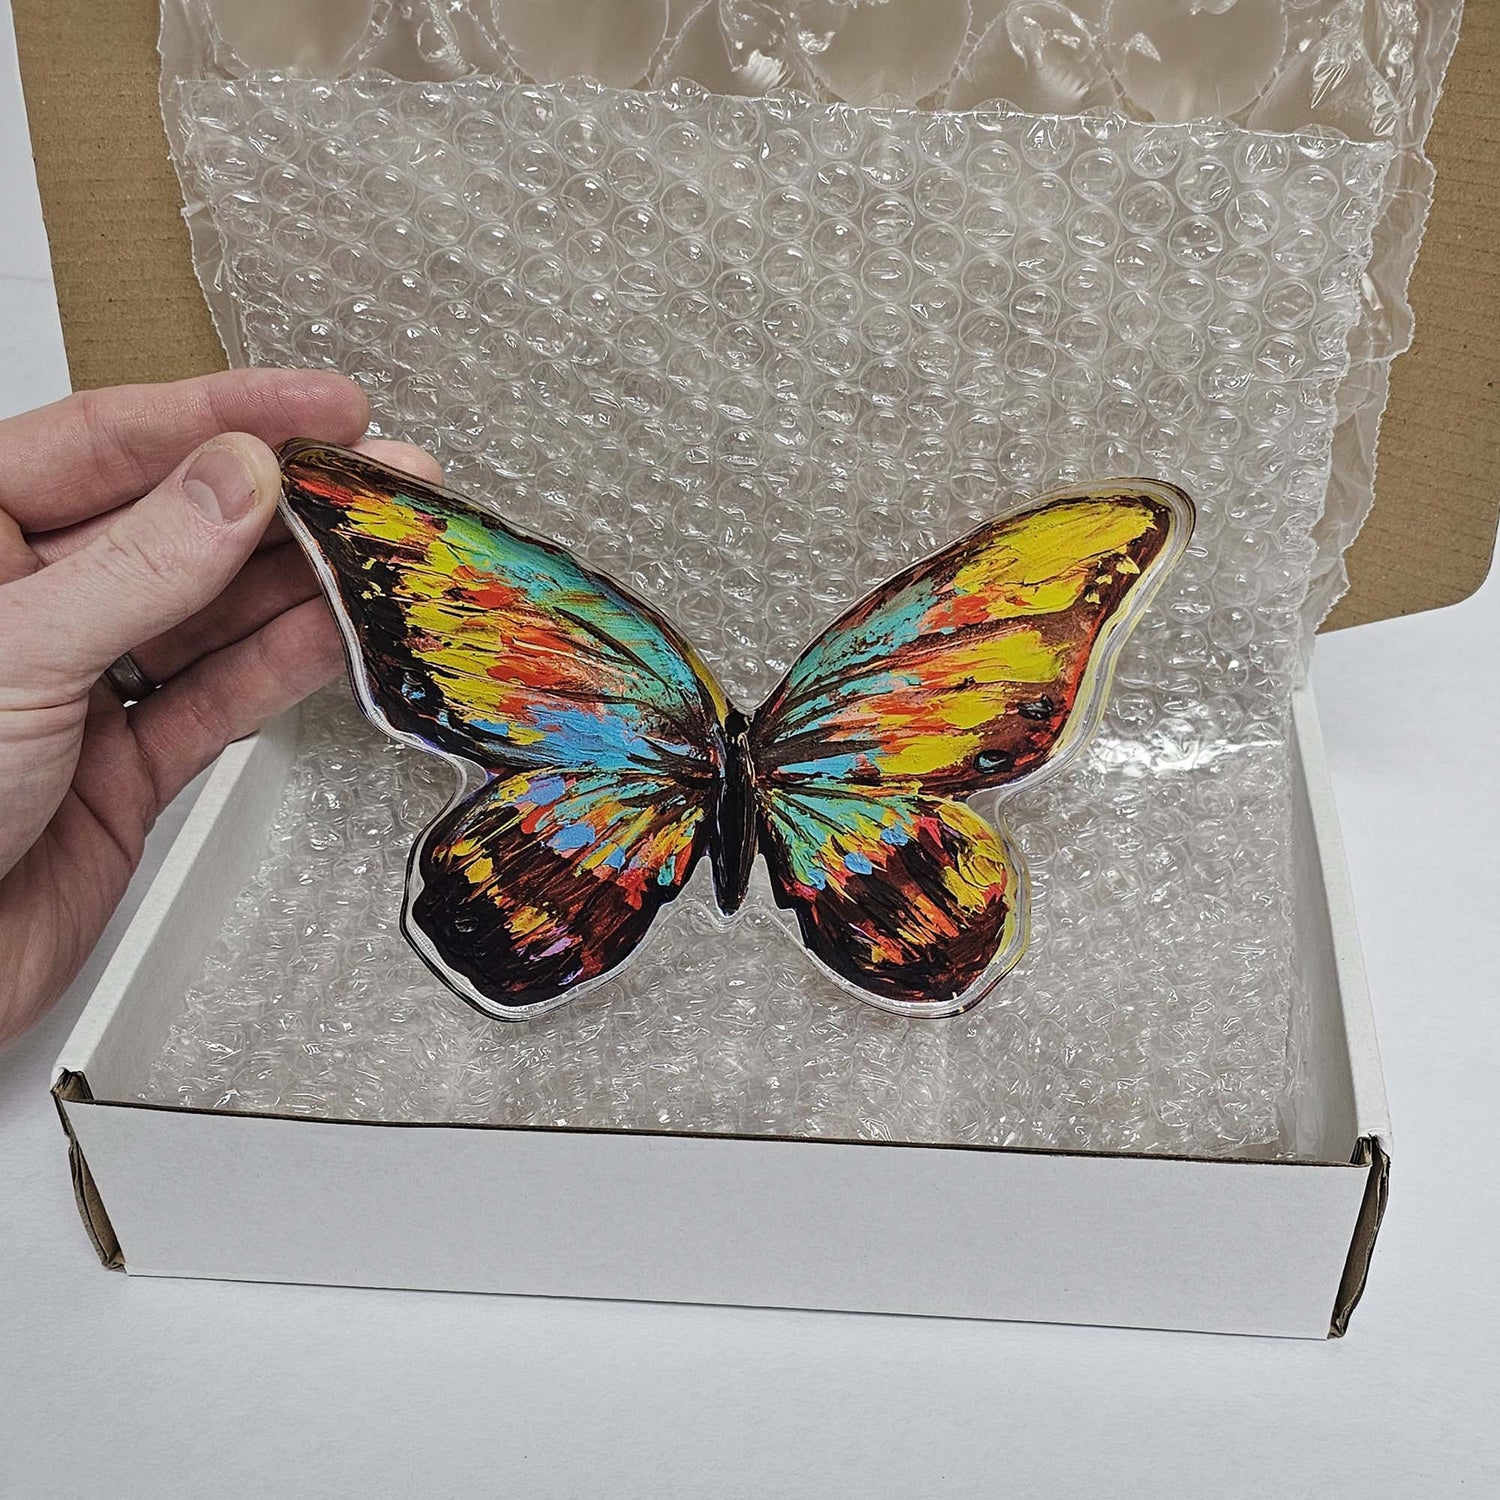 Acrylic cutout art reproduction product inside of a shipping box